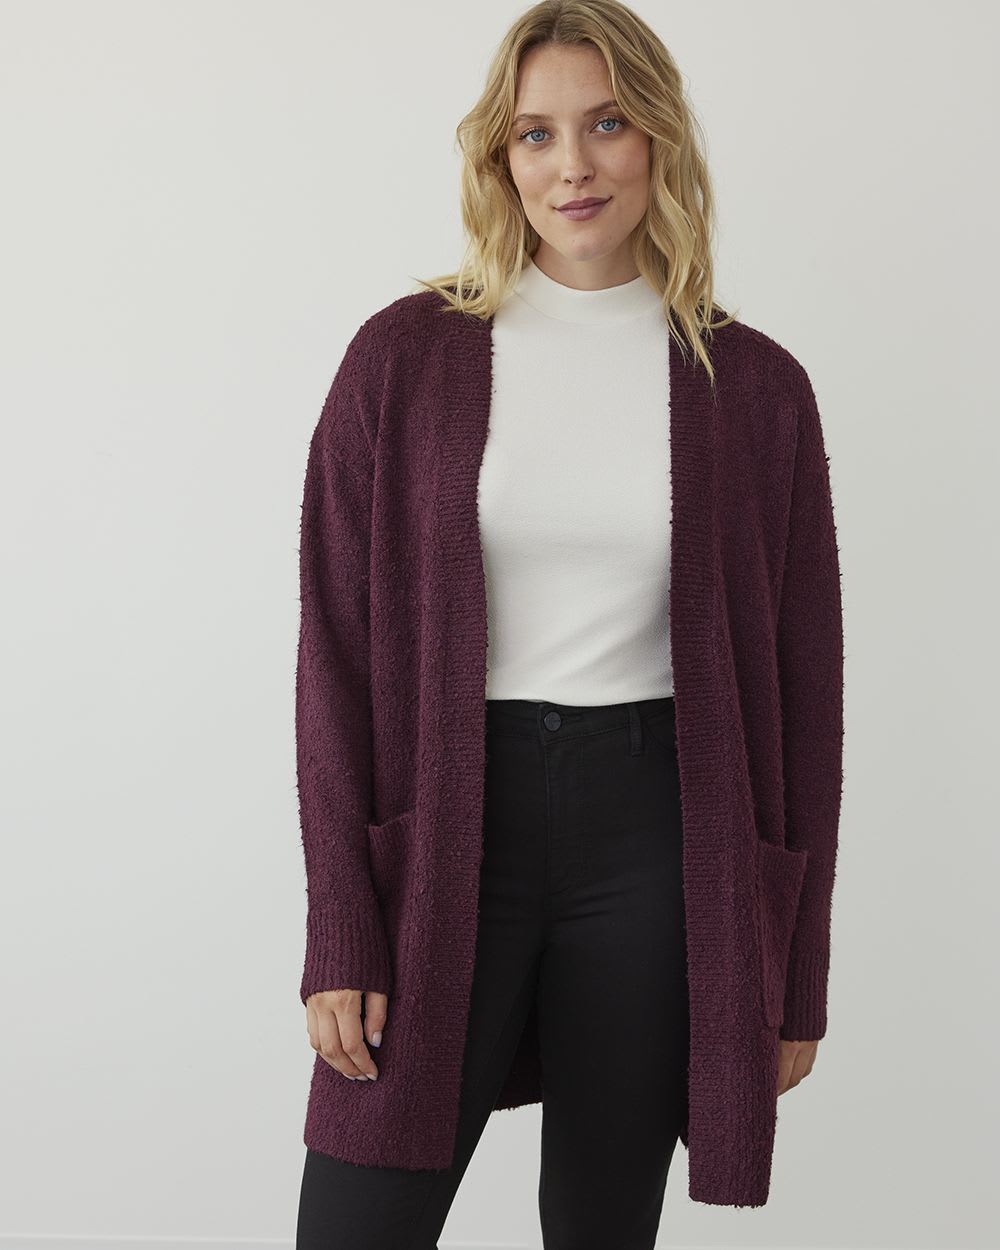 Long Sleeve Cardigan Sweater With Pockets Online | bellvalefarms.com